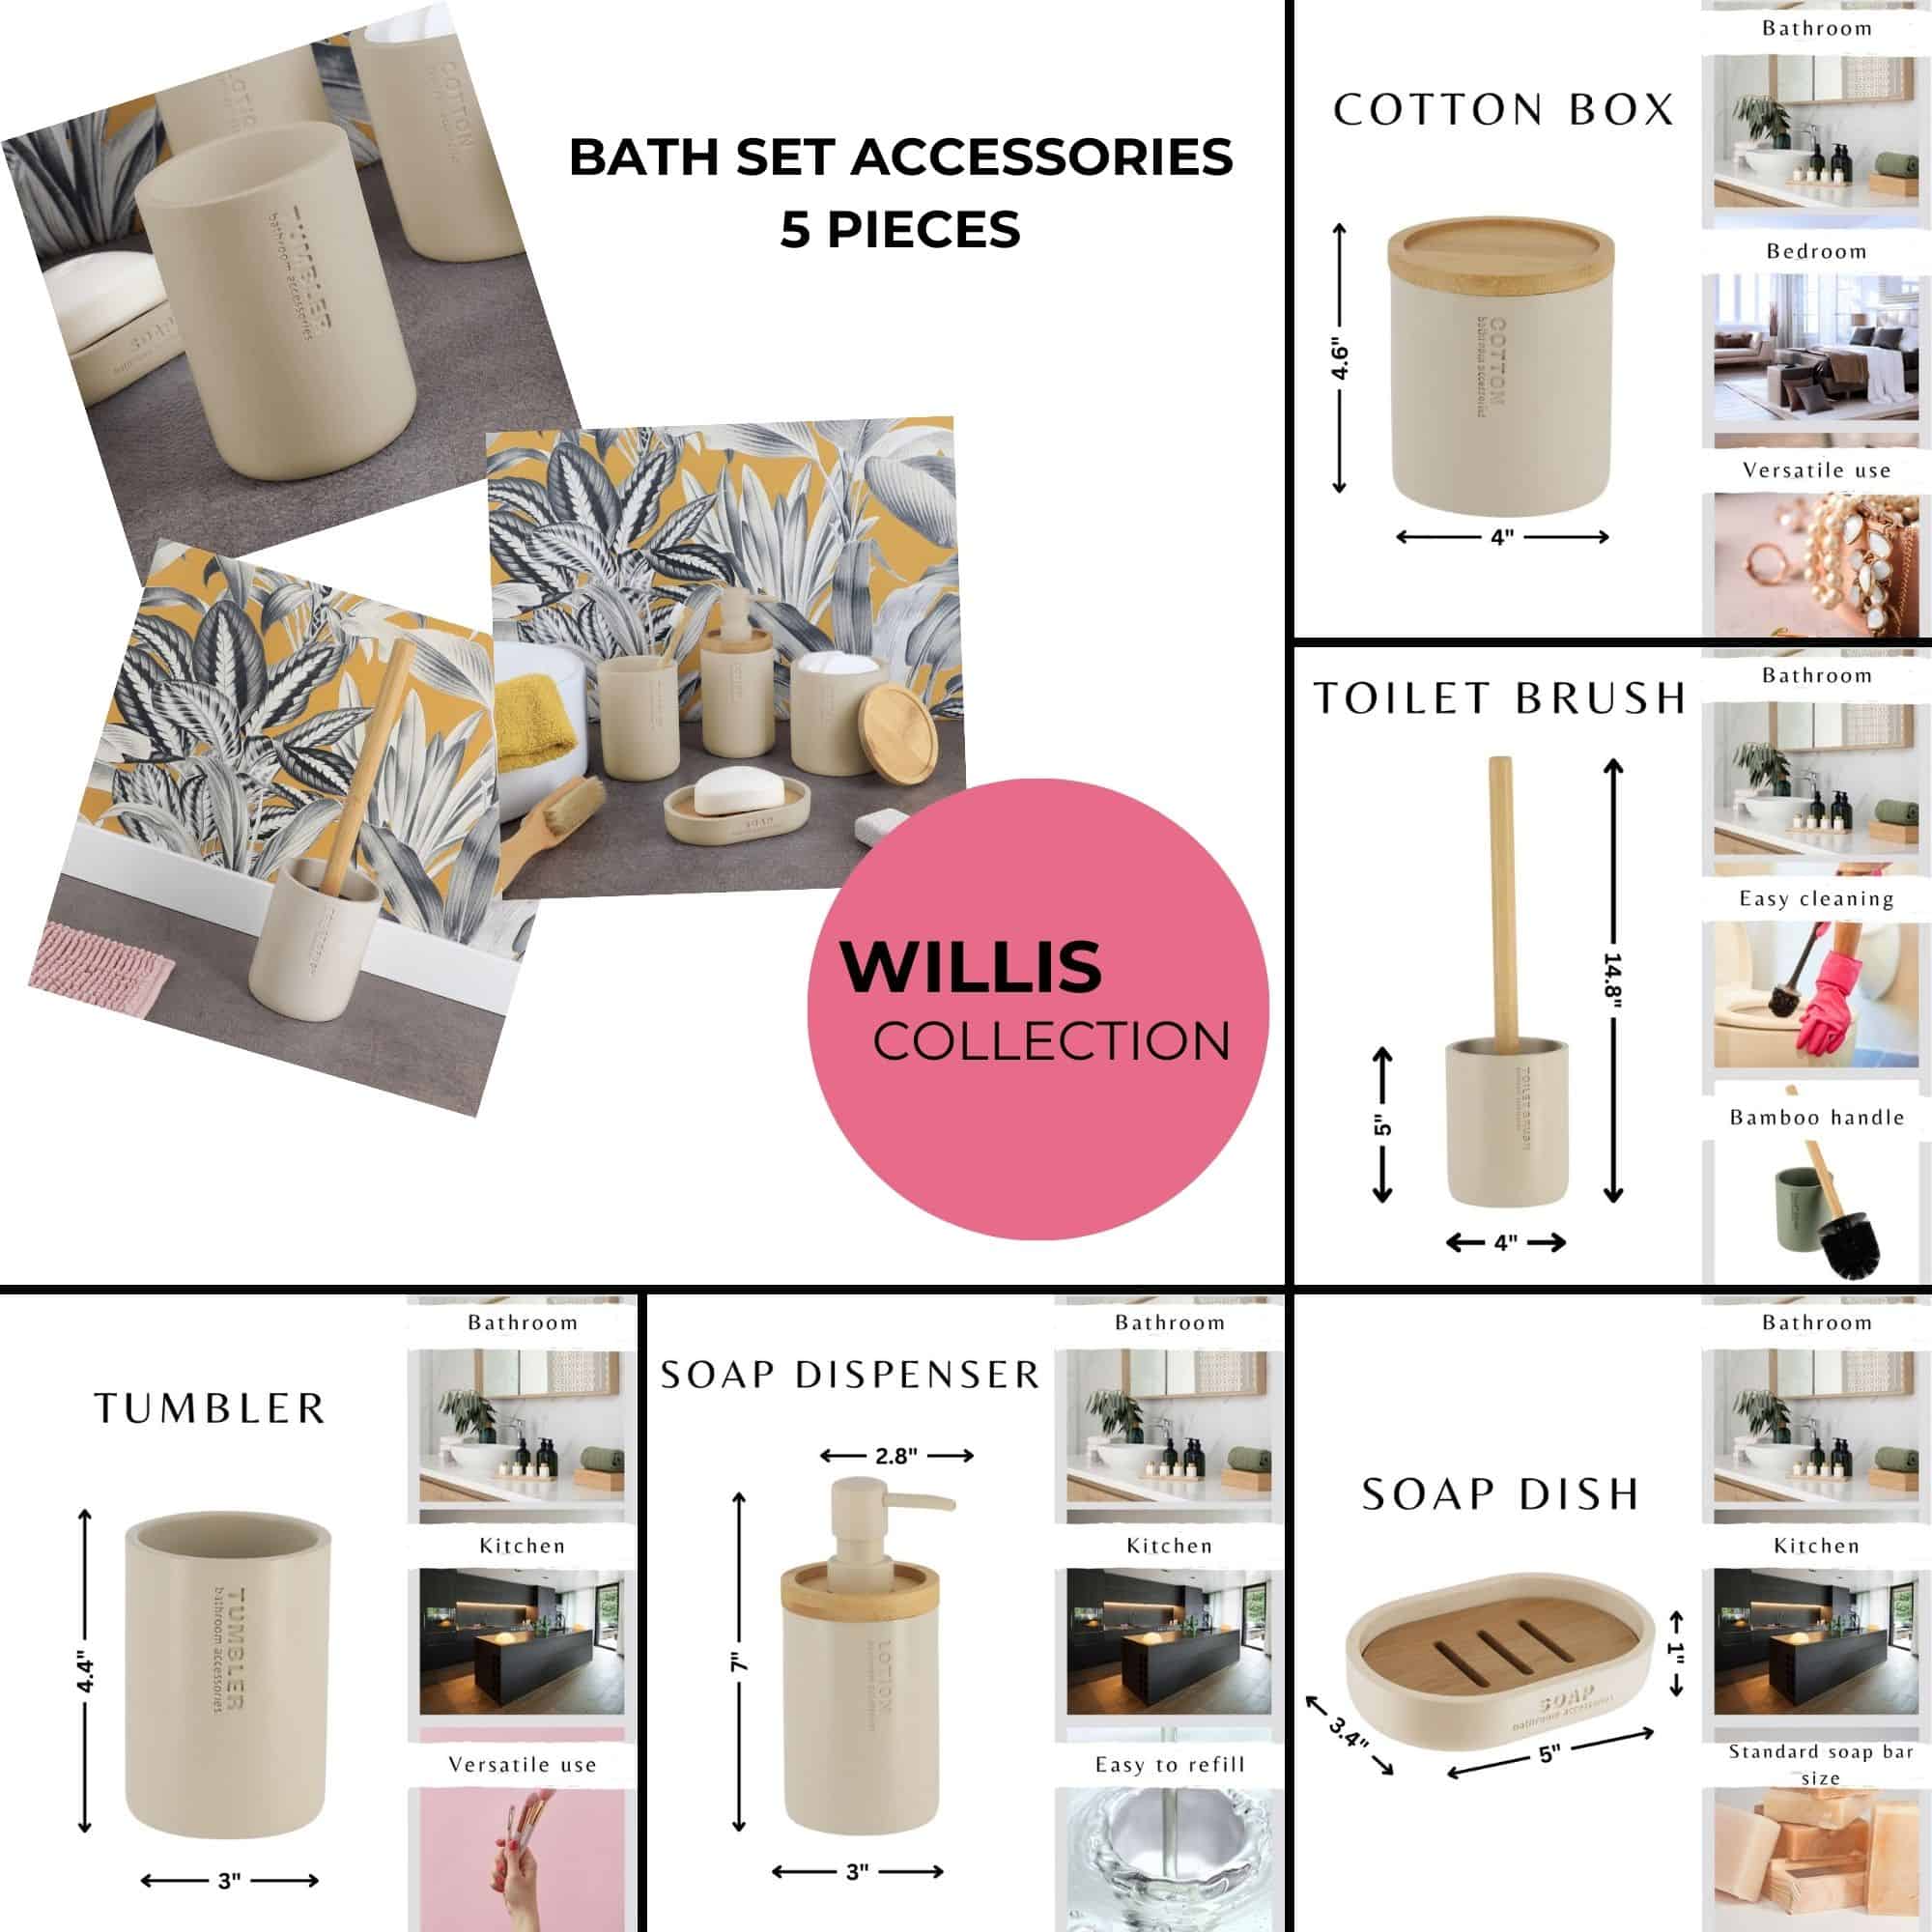 Complete collection bath set accessories 5 pieces fo modern interior creamy beige